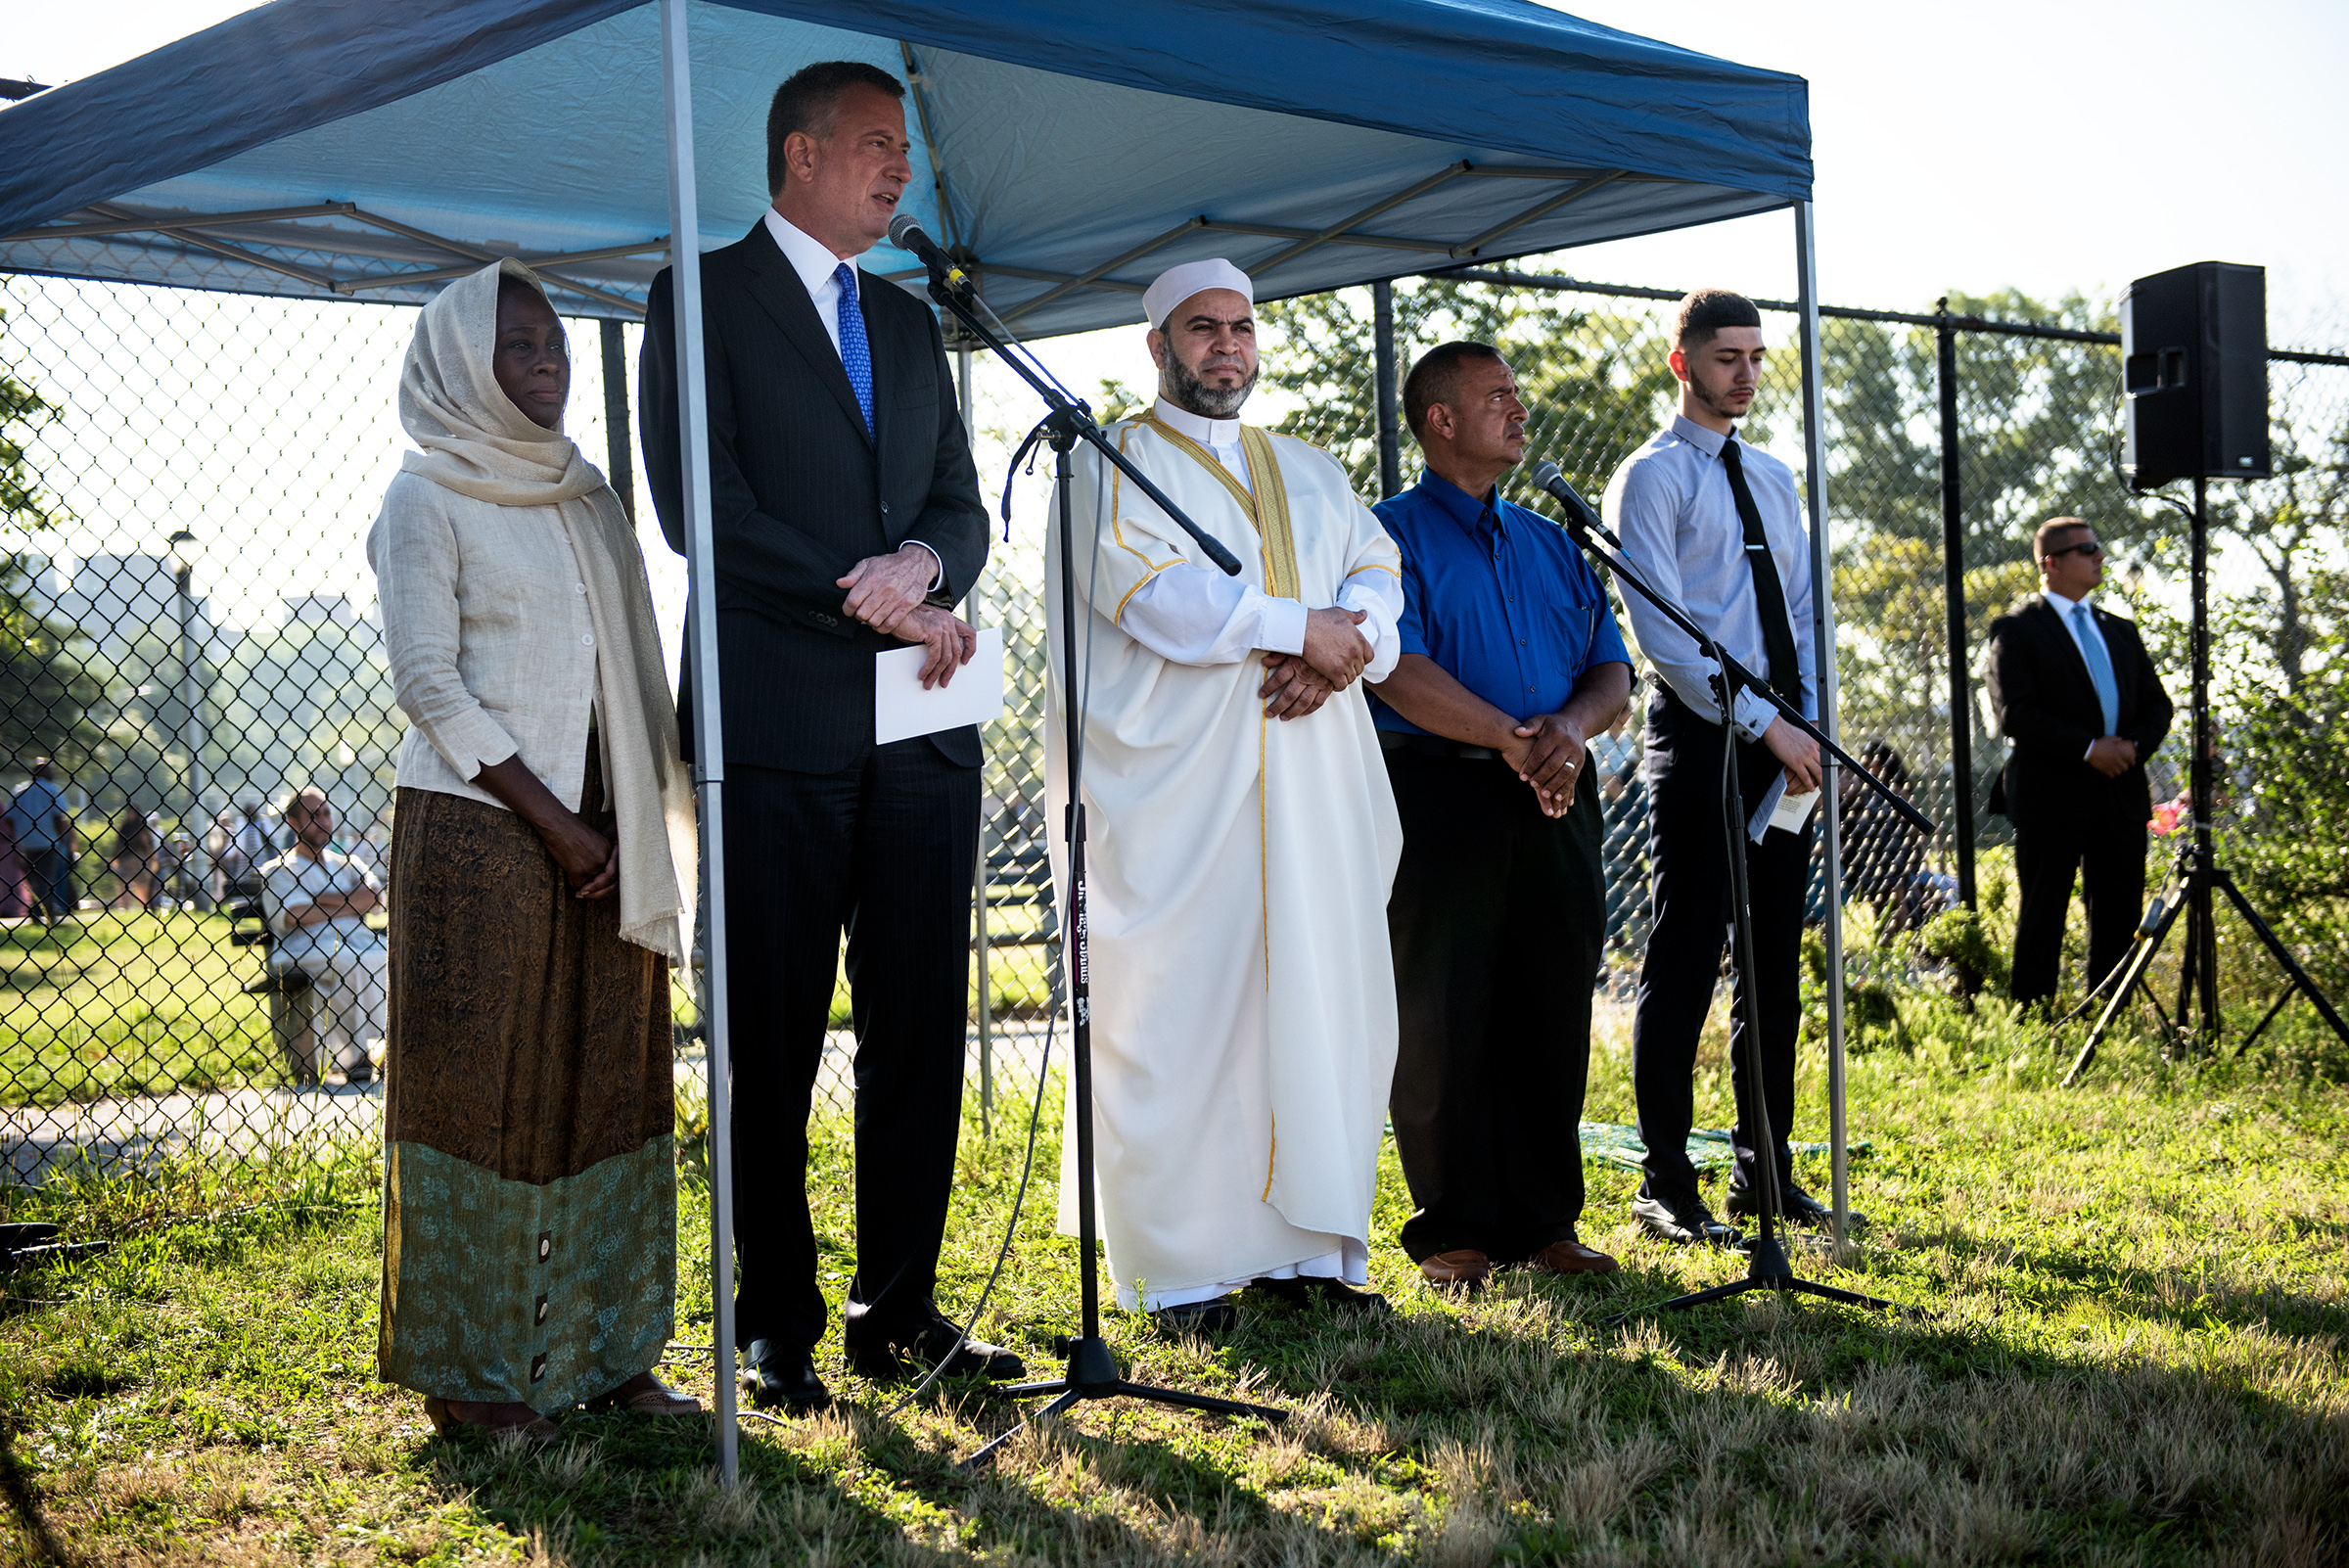 Mayor Bill de Blasio and First Lady Chirlane McCray speak at an Eid al-Fitr prayer at Bensonhurst Park in Brooklyn.